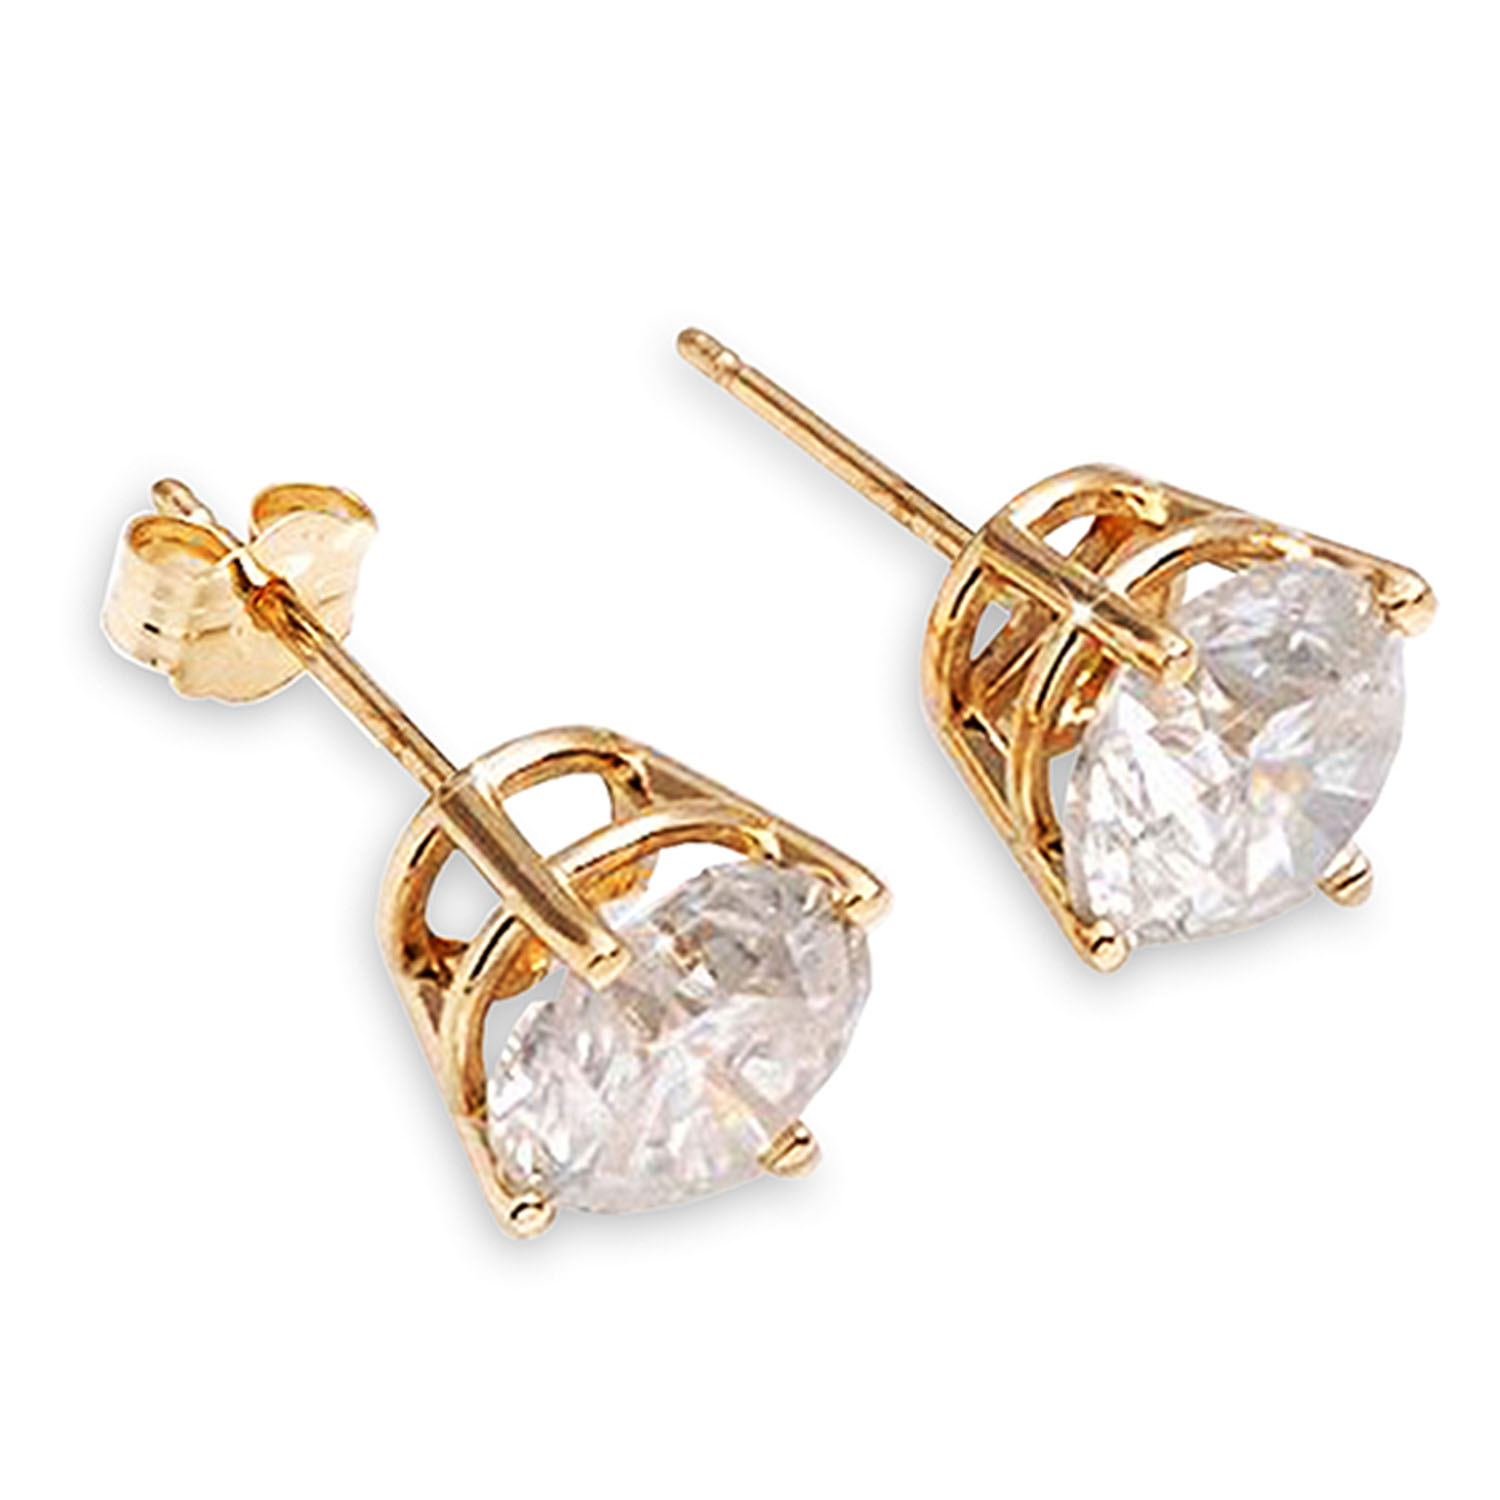 1 CTW 14K Solid Gold Stud Earrings 1.0 Carat Natural Diamond | eBay